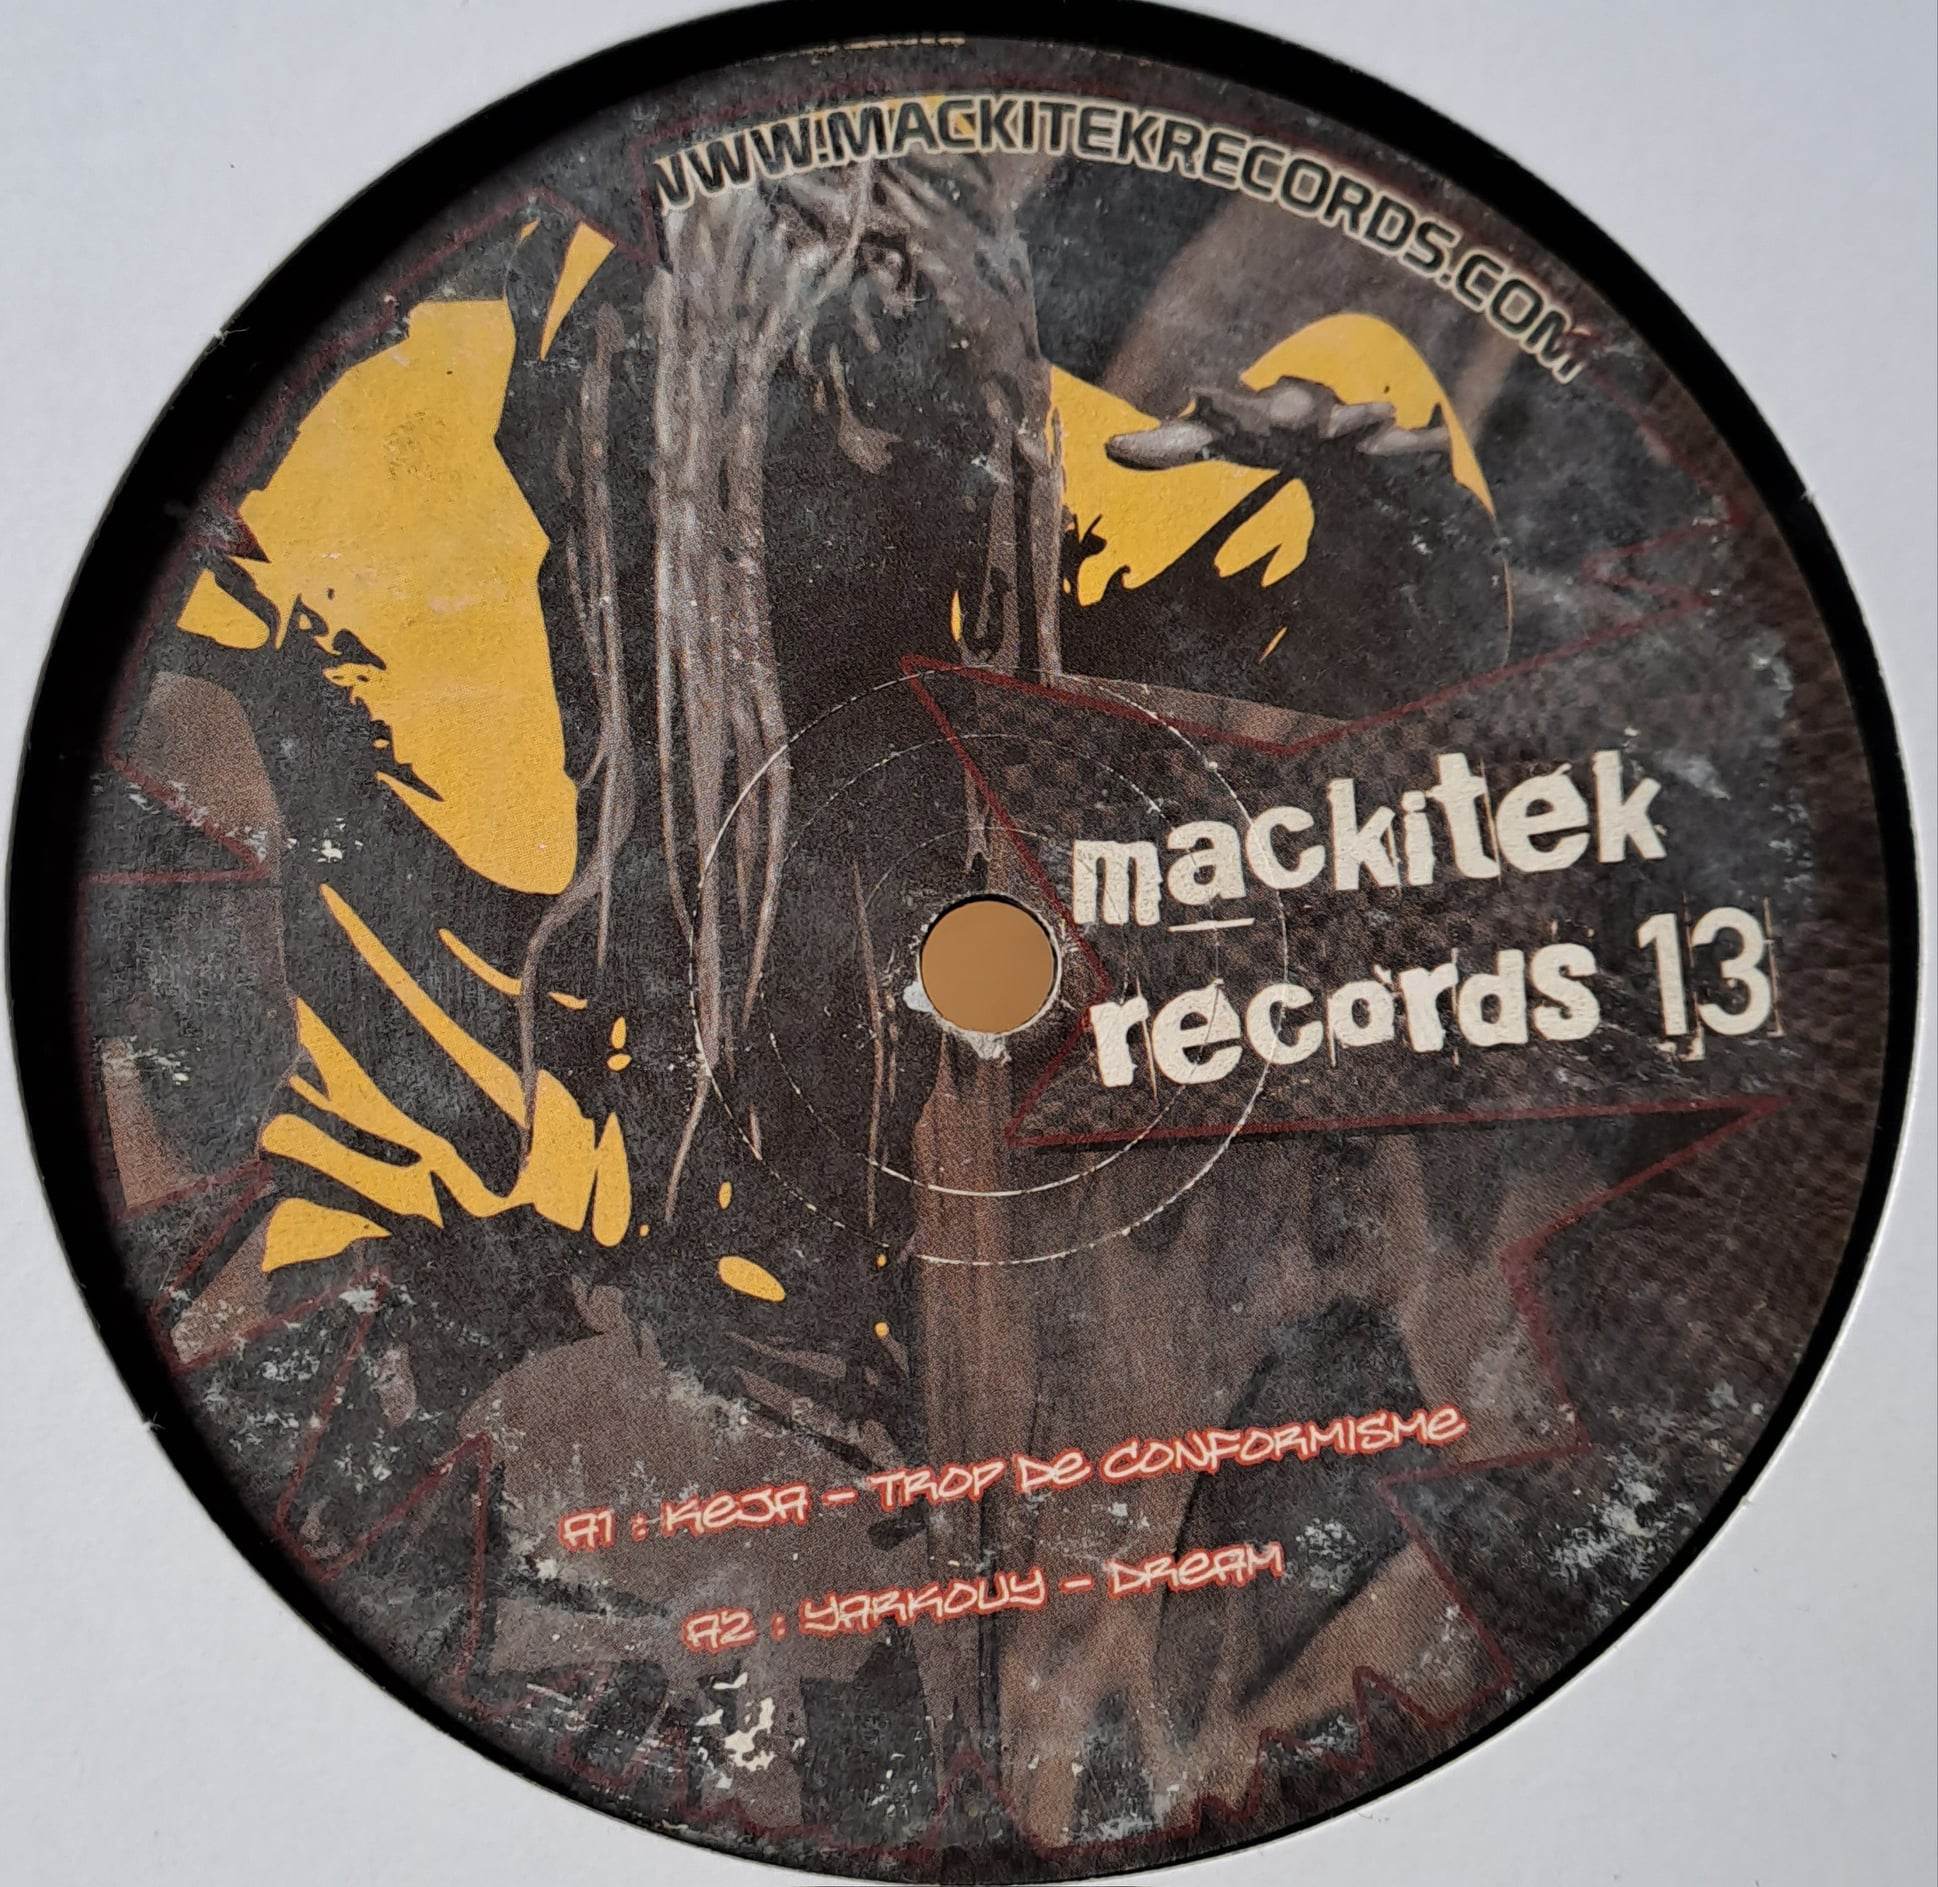 Mackitek 13 - vinyle breakcore